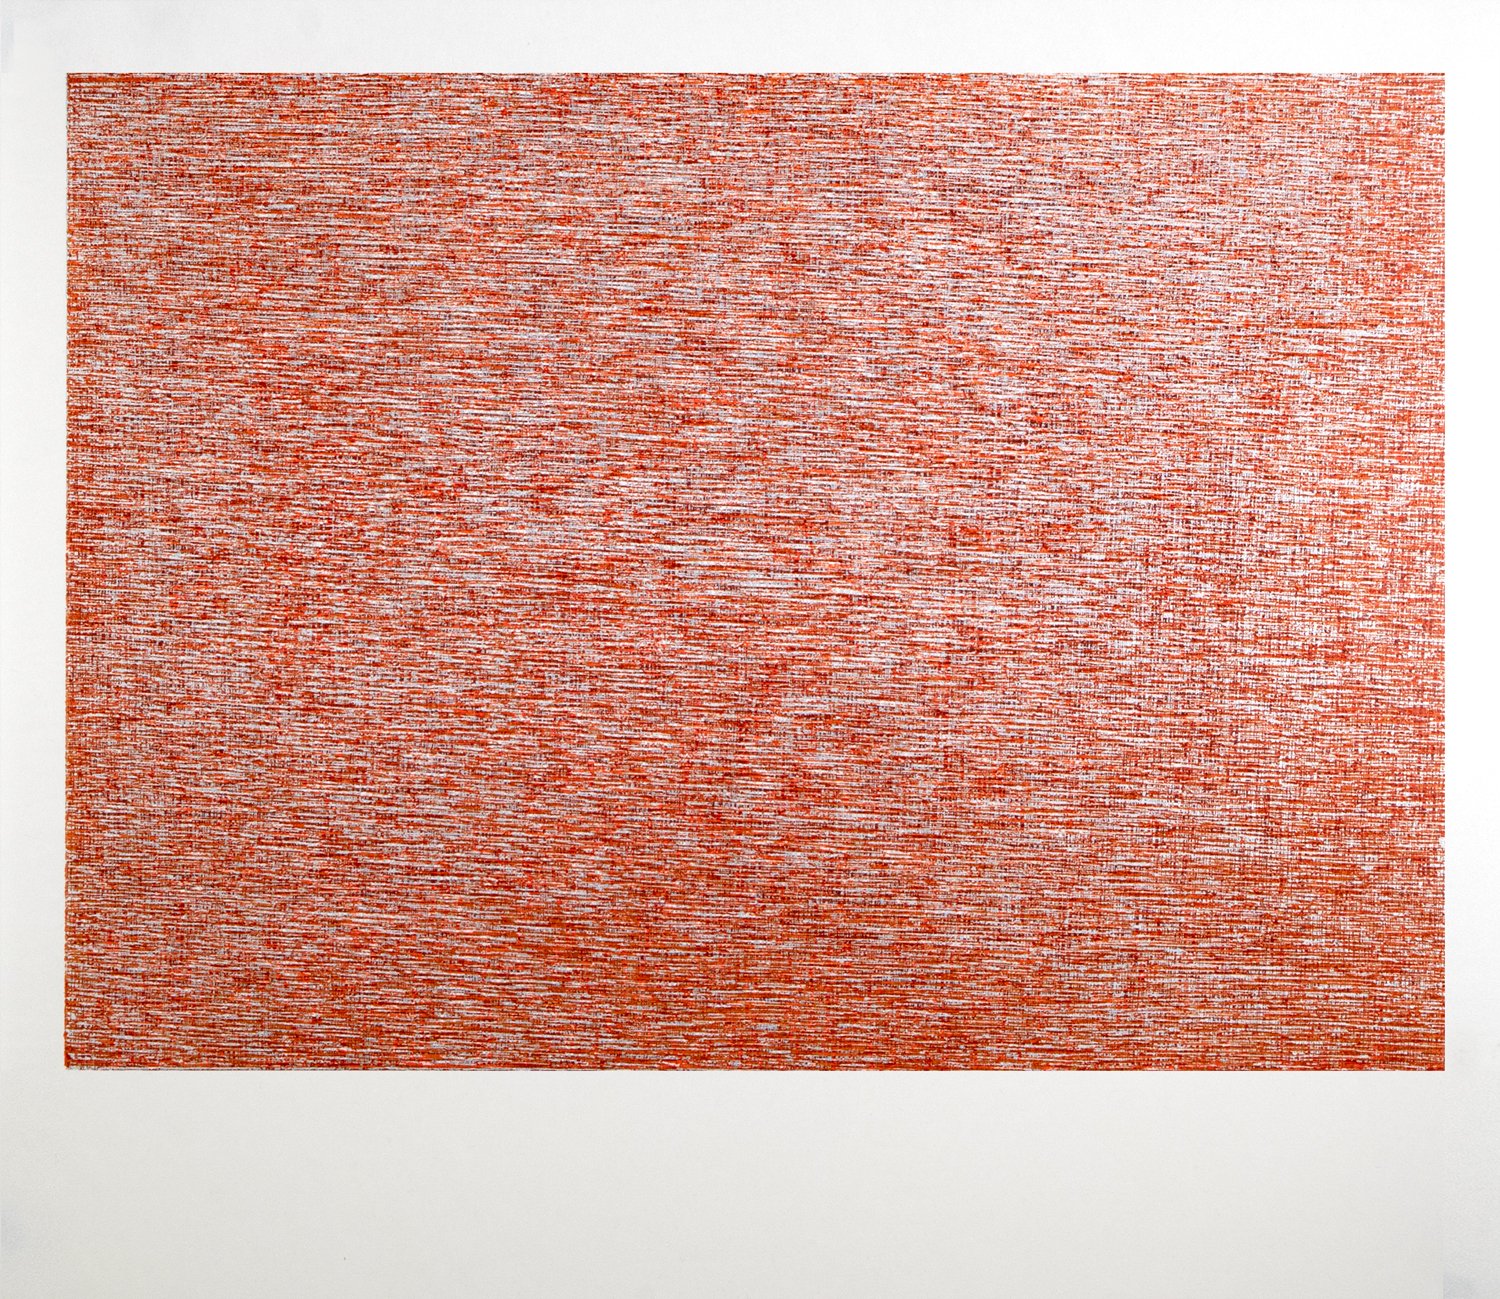  Michael Phillips,  Untitled  2022, woodblock, 45 x 50 cm 